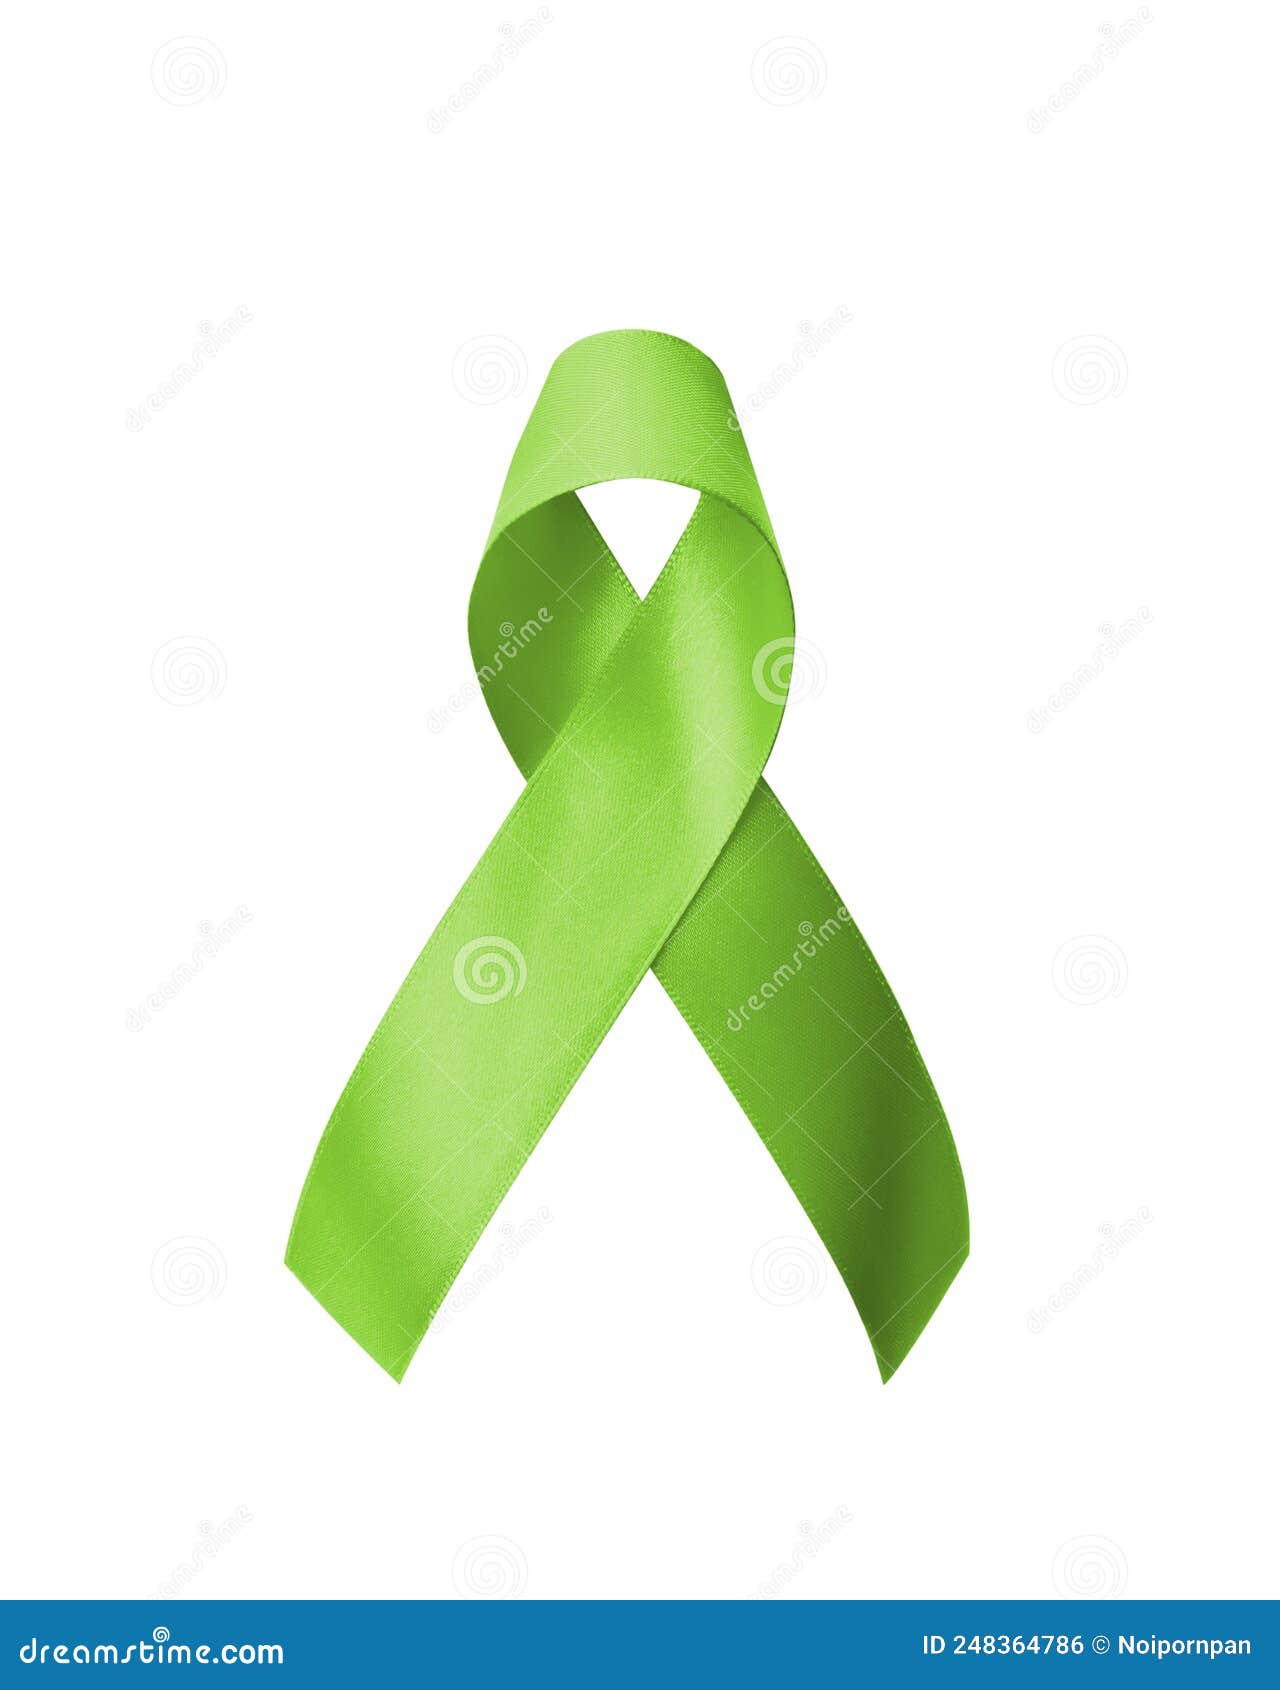 Celiac Disease Awareness Light Green Ribbon party Banner 35x70in